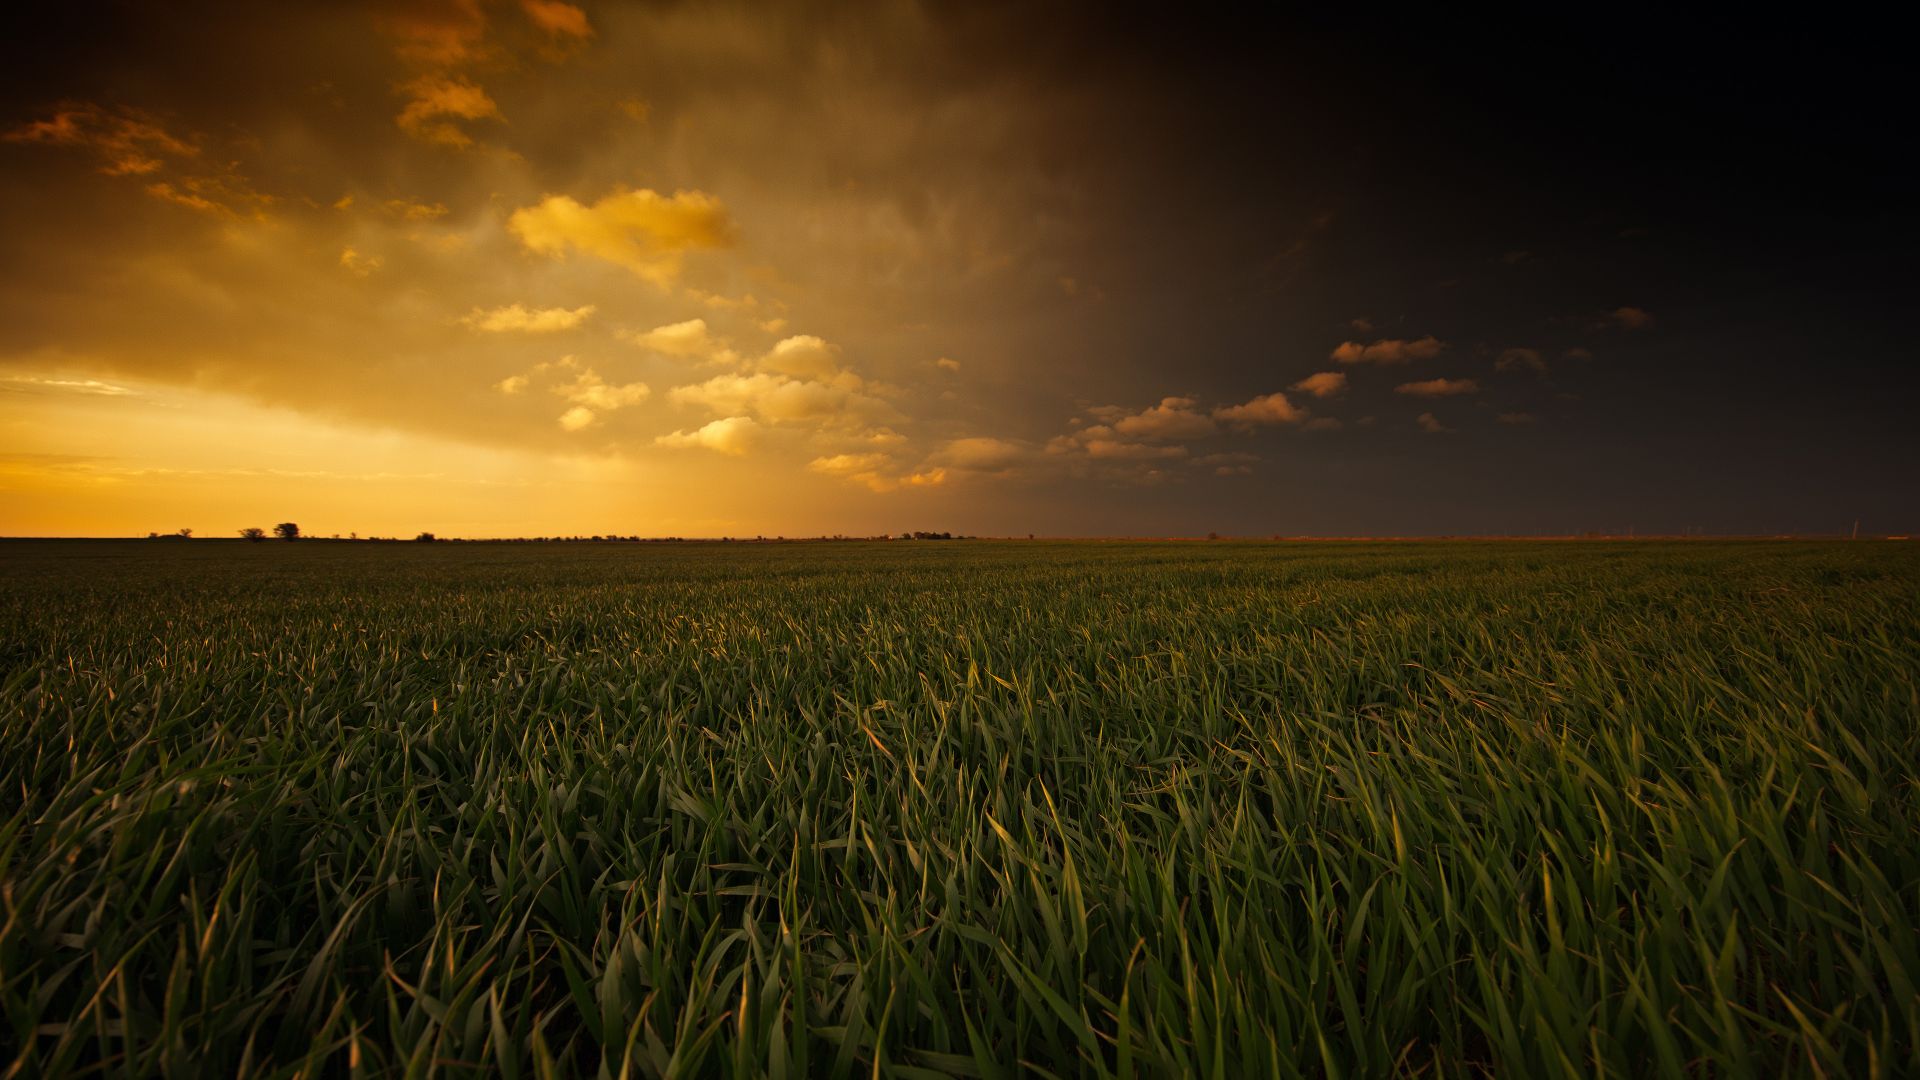 Desktop Wallpaper Sunset And Grass Fields Hd Image Picture